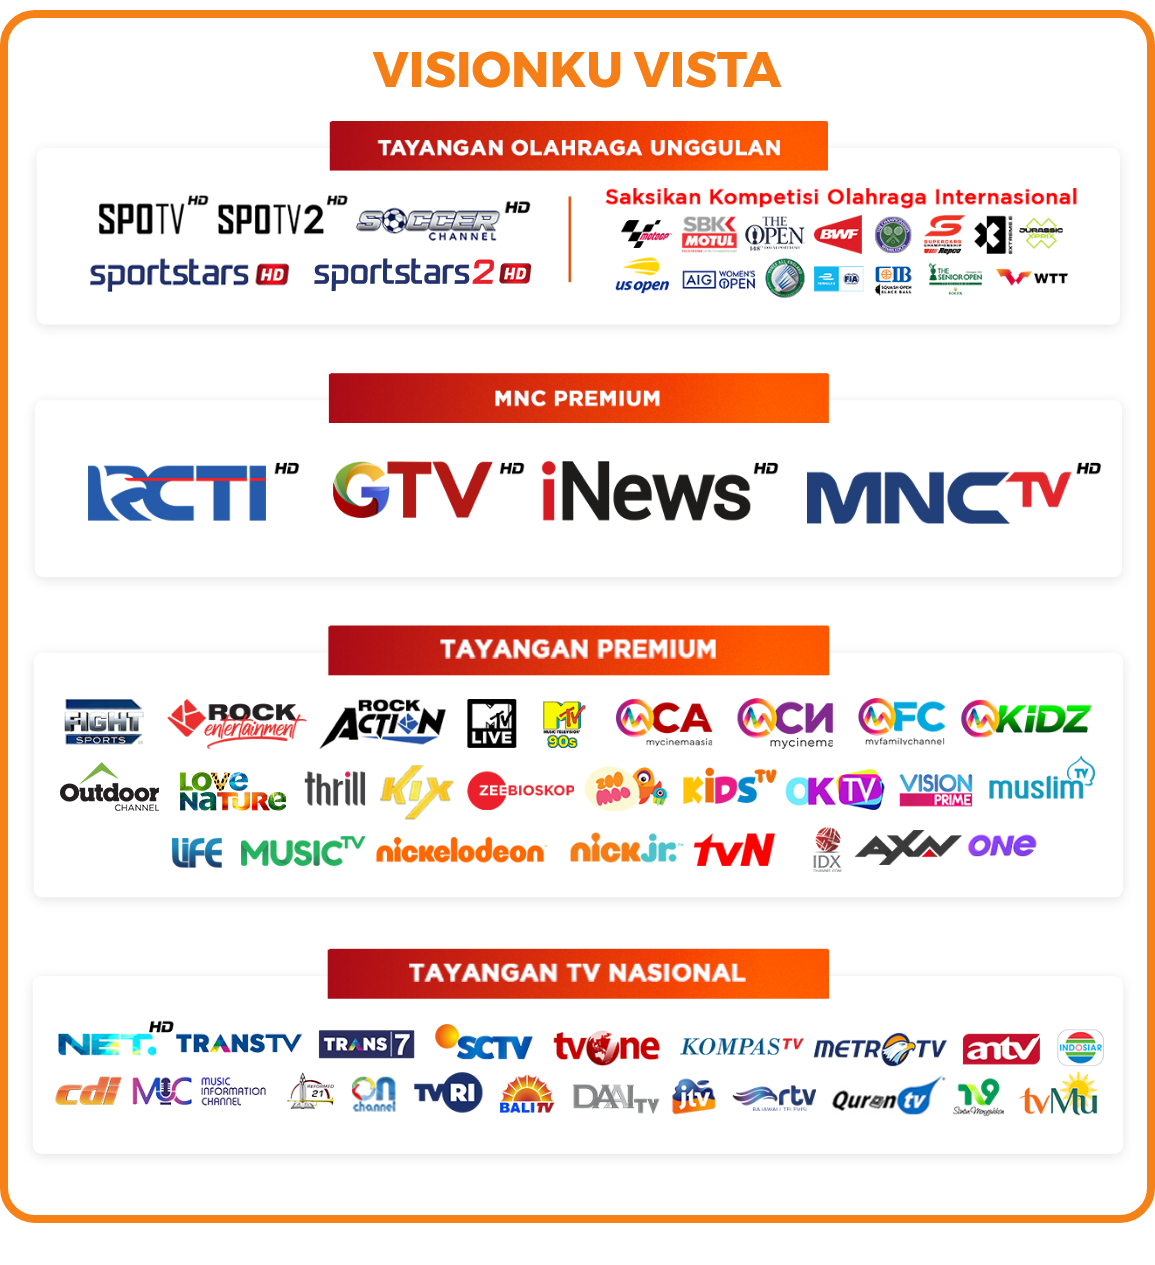 Channel Visionku Vista